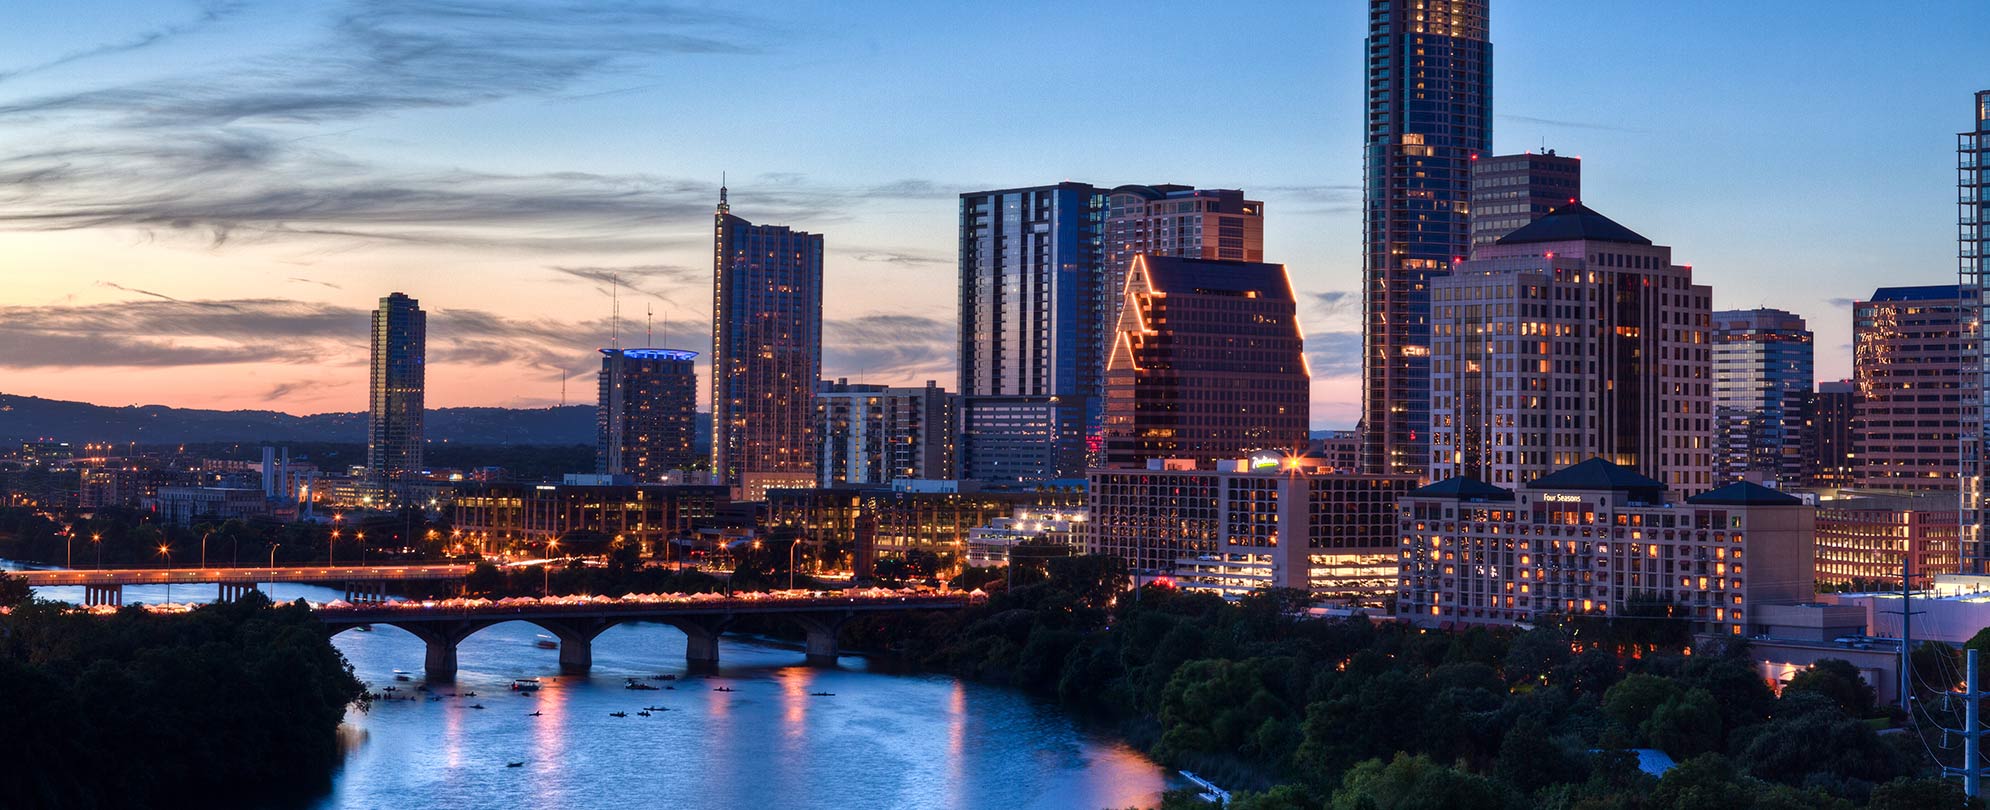 The city skyline of Austin, Texas, lit up at sunset.